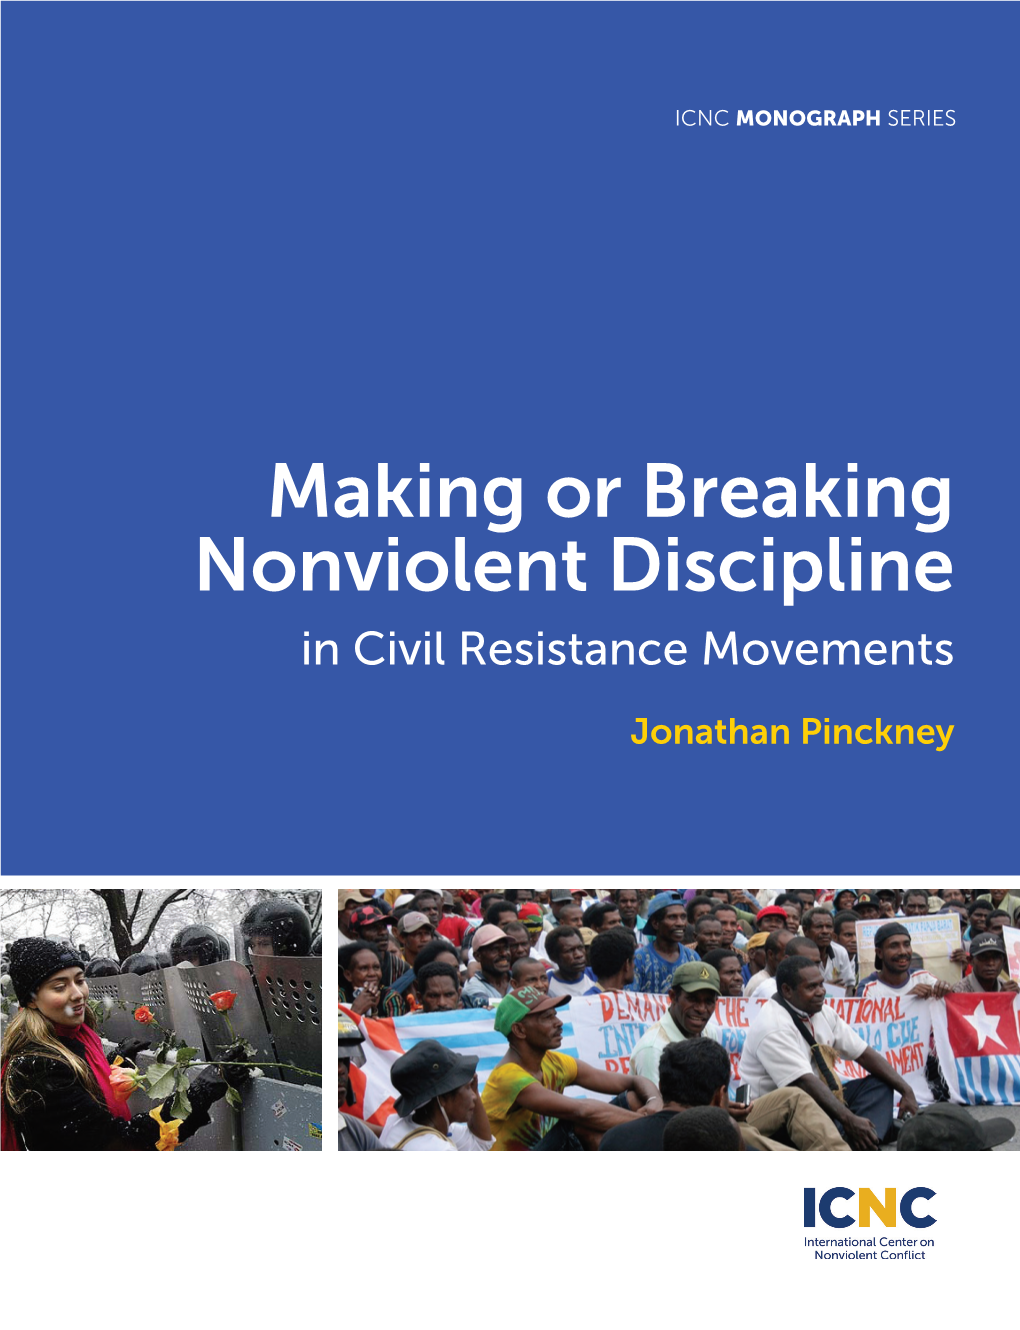 Nonviolent Discipline in Civil Resistance Movements